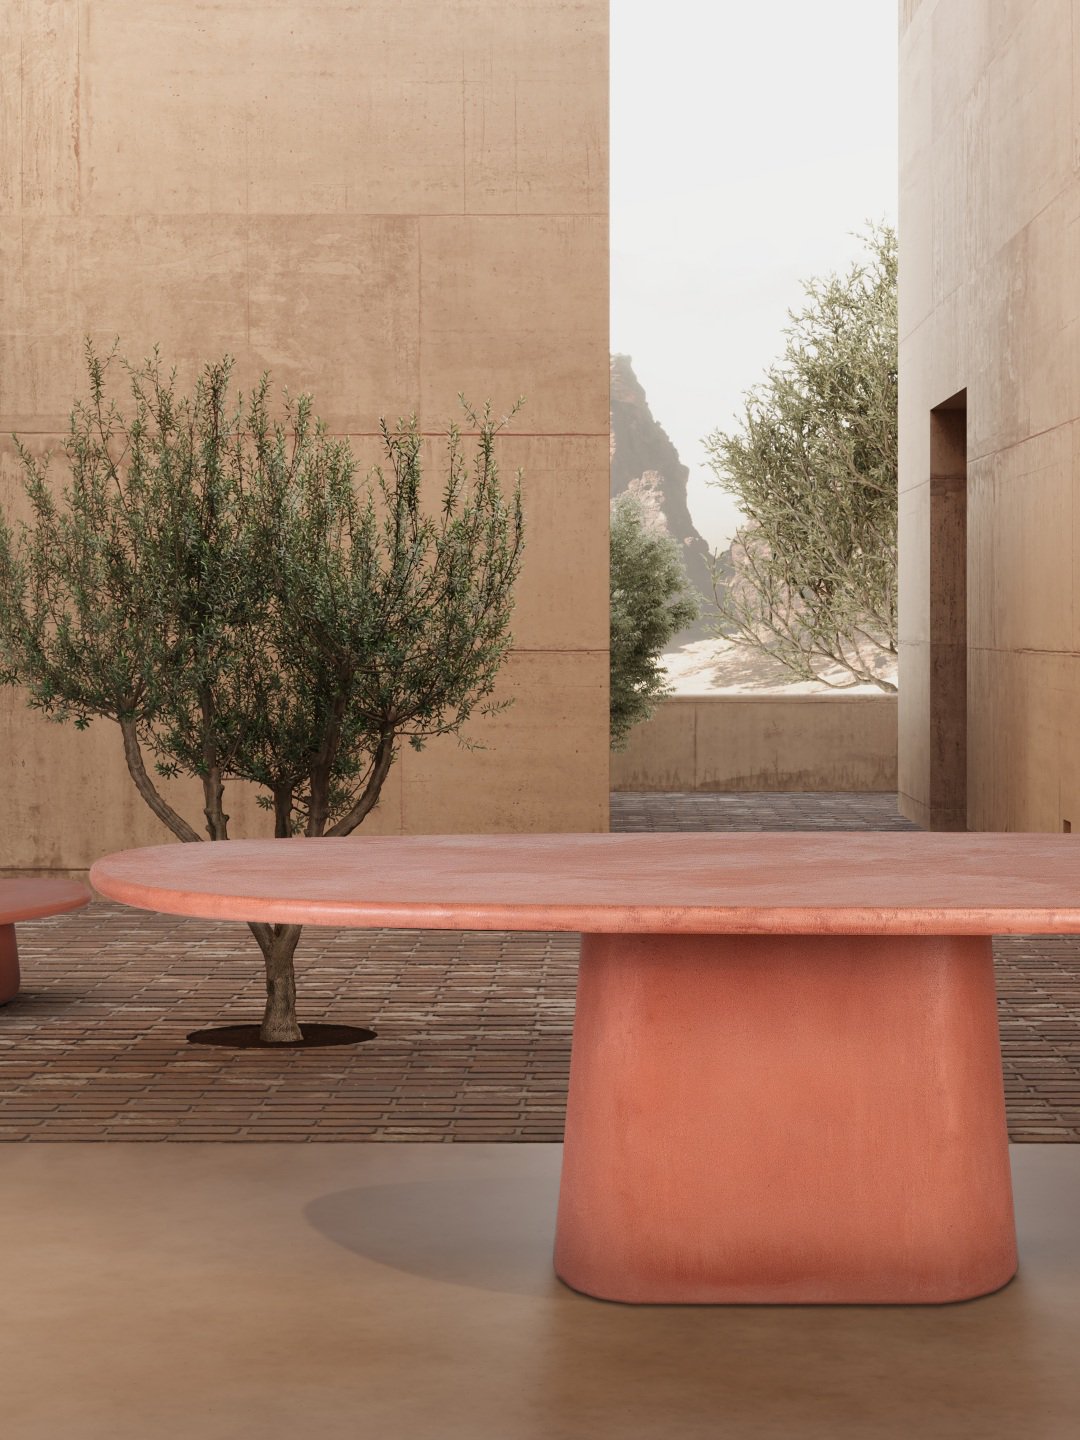 Zuri Dining Table Terracotta Insitu Orange Tallira Furniture, for indoor/outdoor use by Muundo